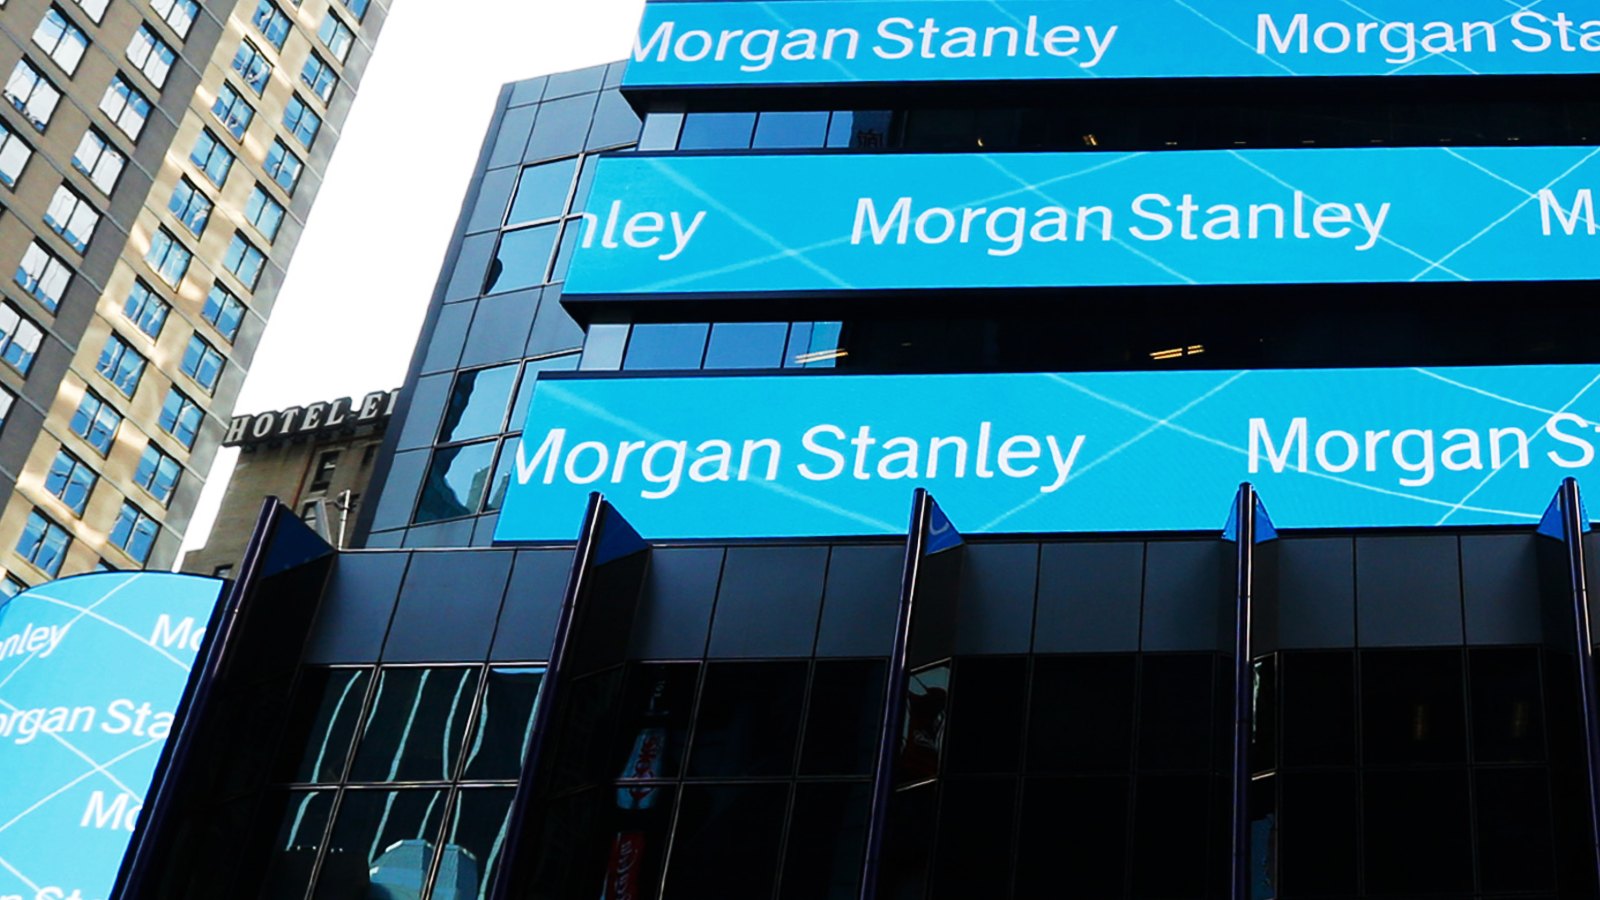 Morgan Stanley reports data breach after vendor Accellion hack